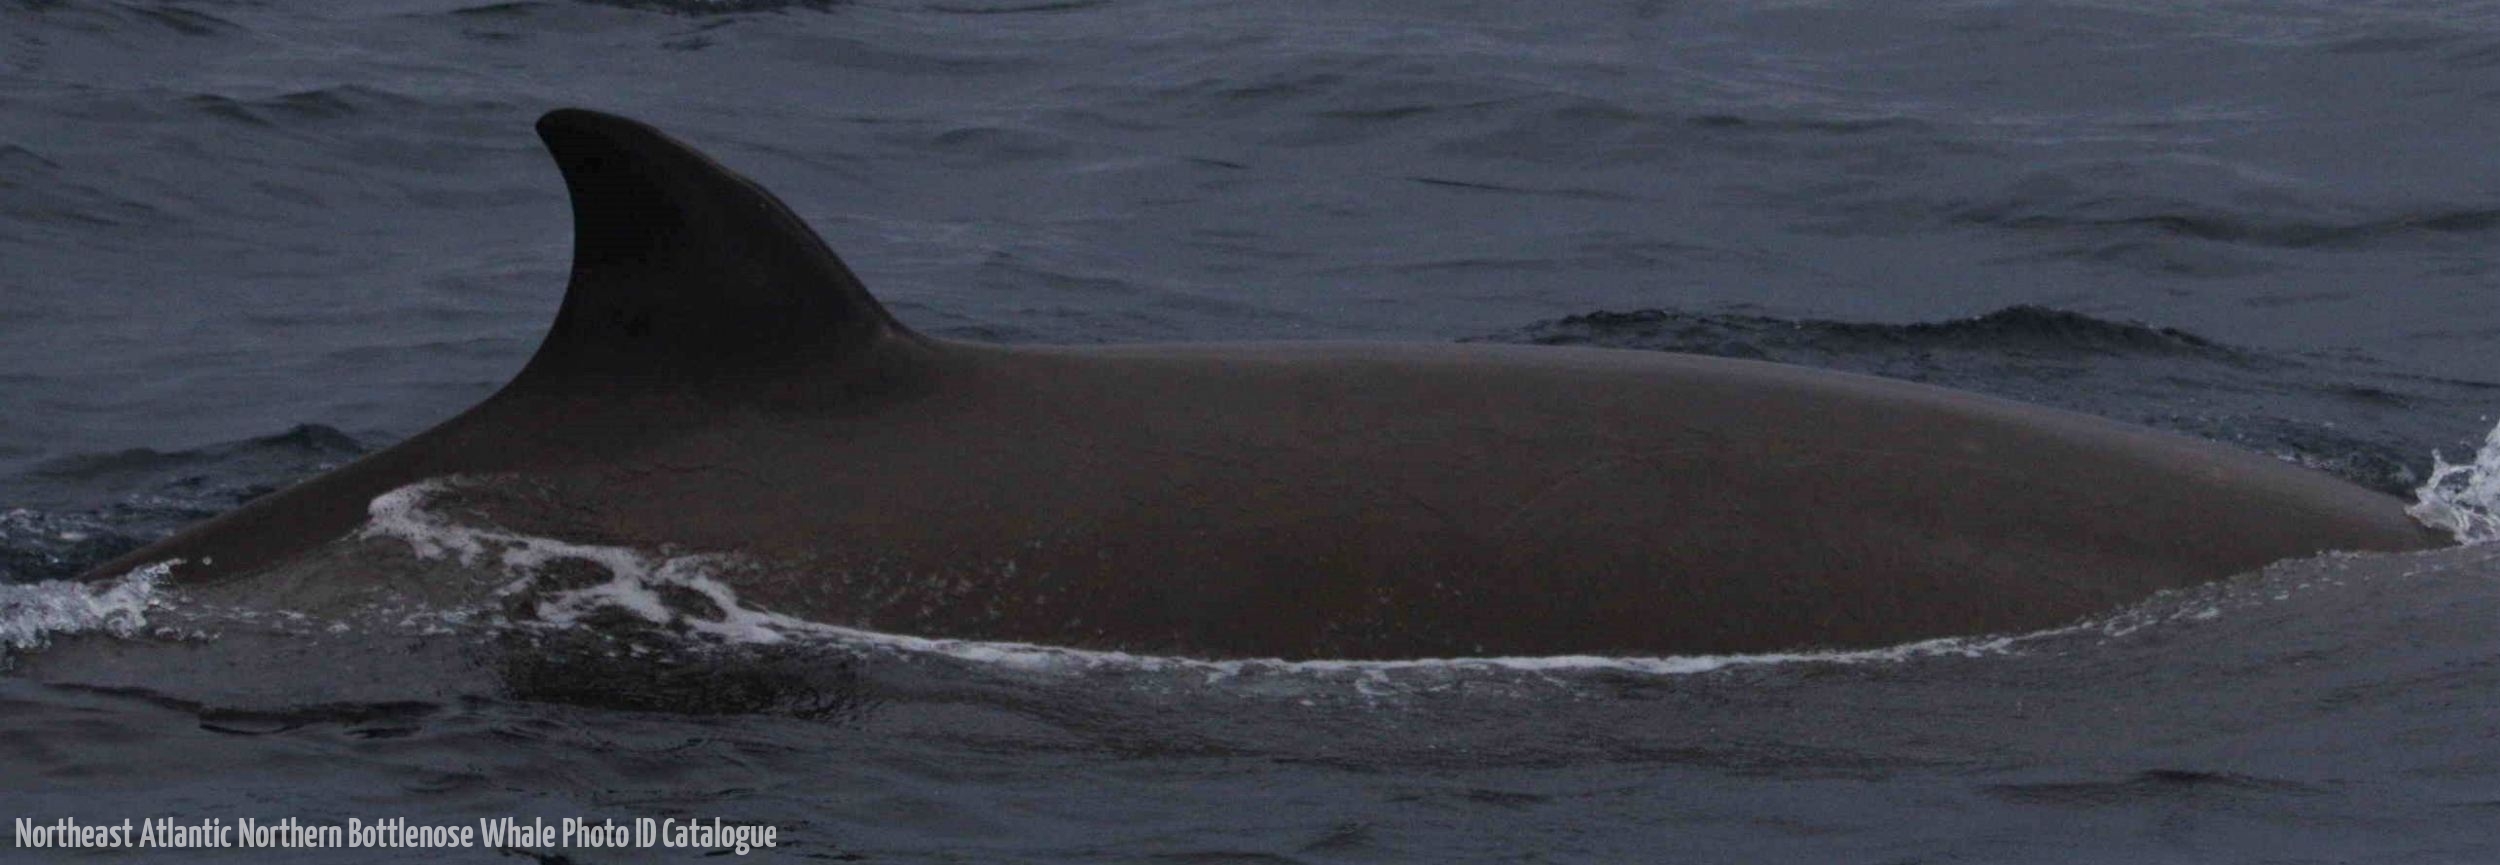 Whale ID: 0310,  Date taken: 24-06-2014,  Photographer: Lucia M. Martín López